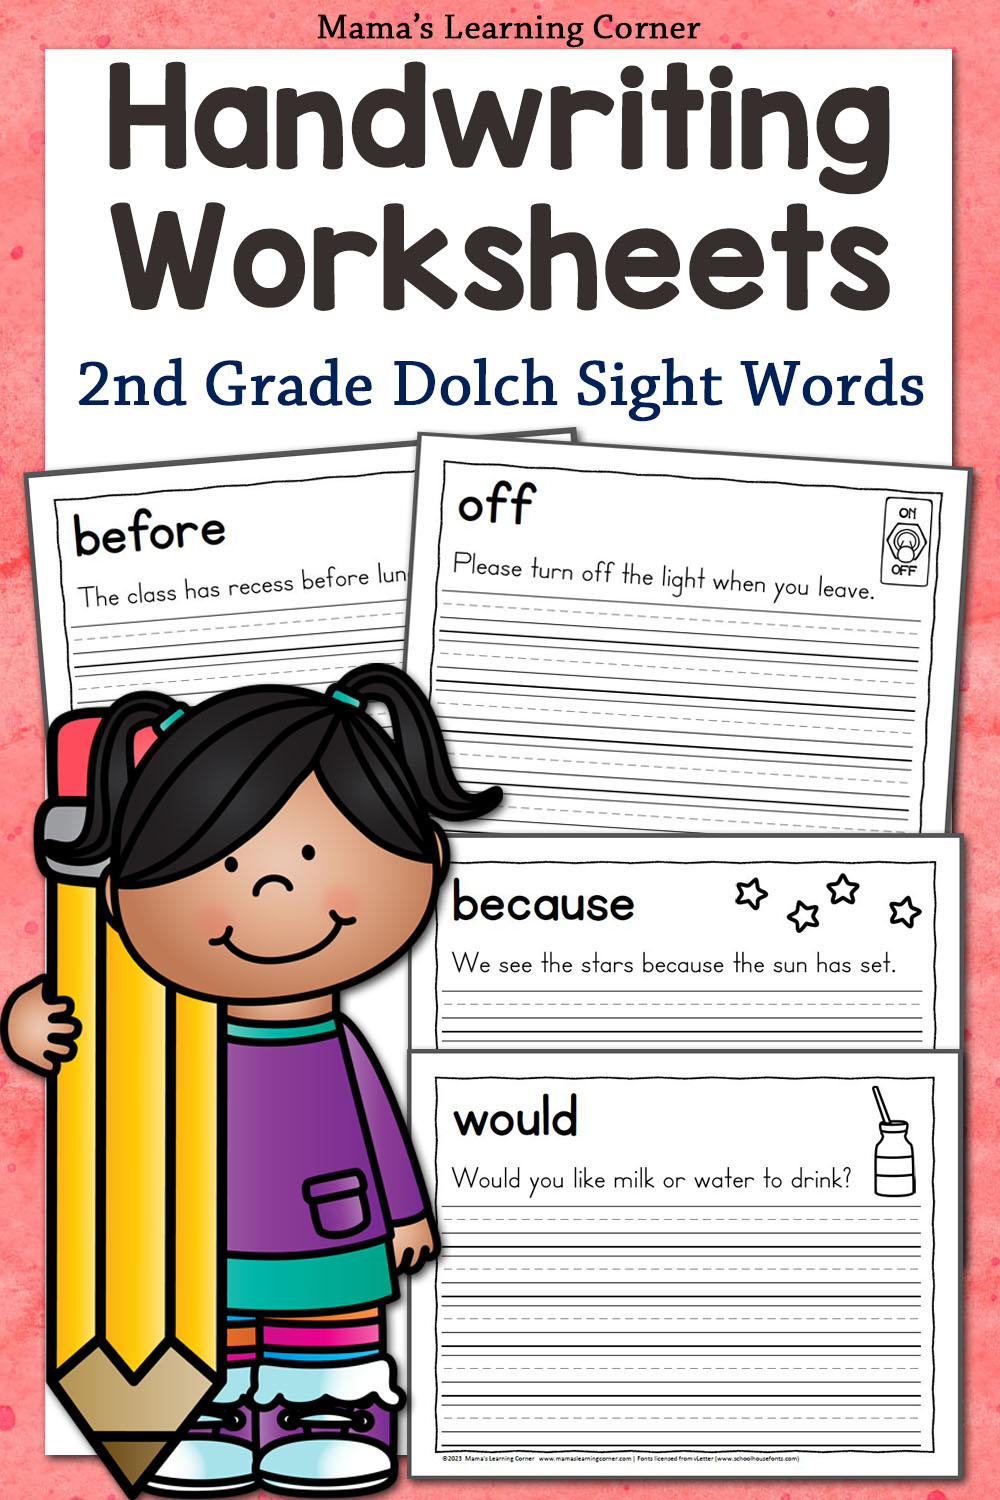 2nd-grade-dolch-sight-words-handwriting-worksheets-mamas-learning-corner